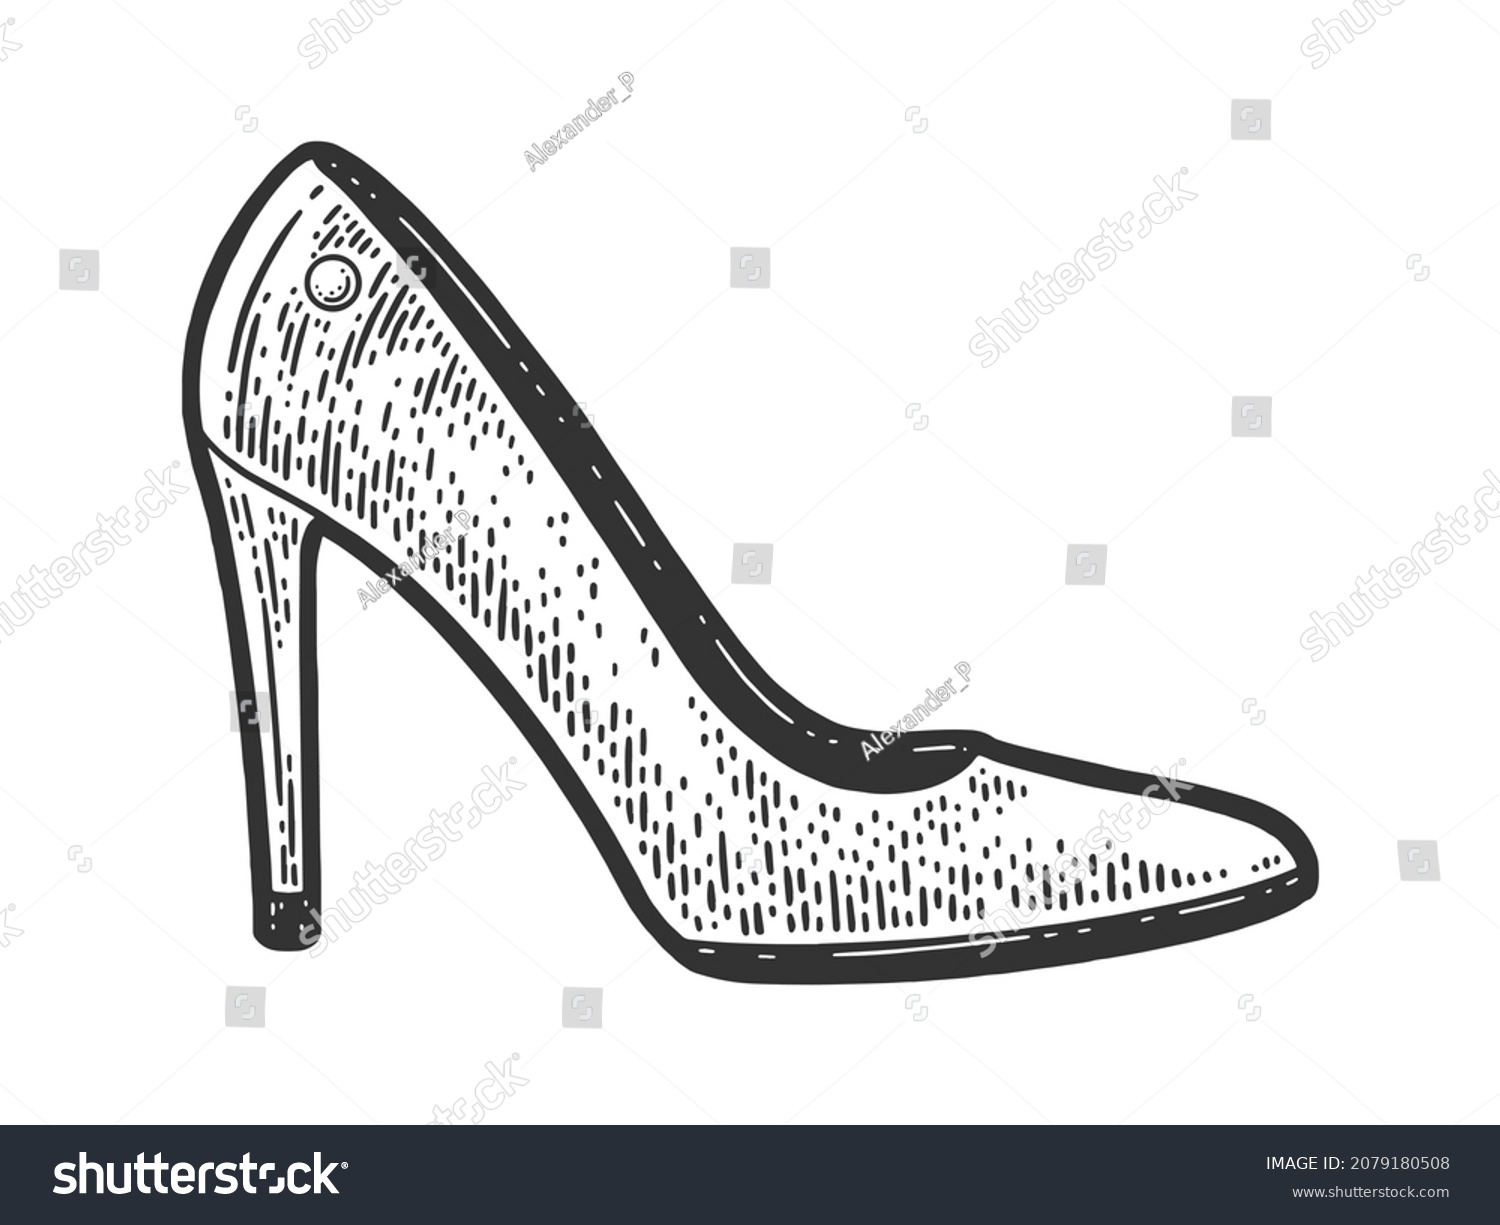 SVG of woman high heel shoe sketch engraving vector illustration. T-shirt apparel print design. Scratch board imitation. Black and white hand drawn image. svg